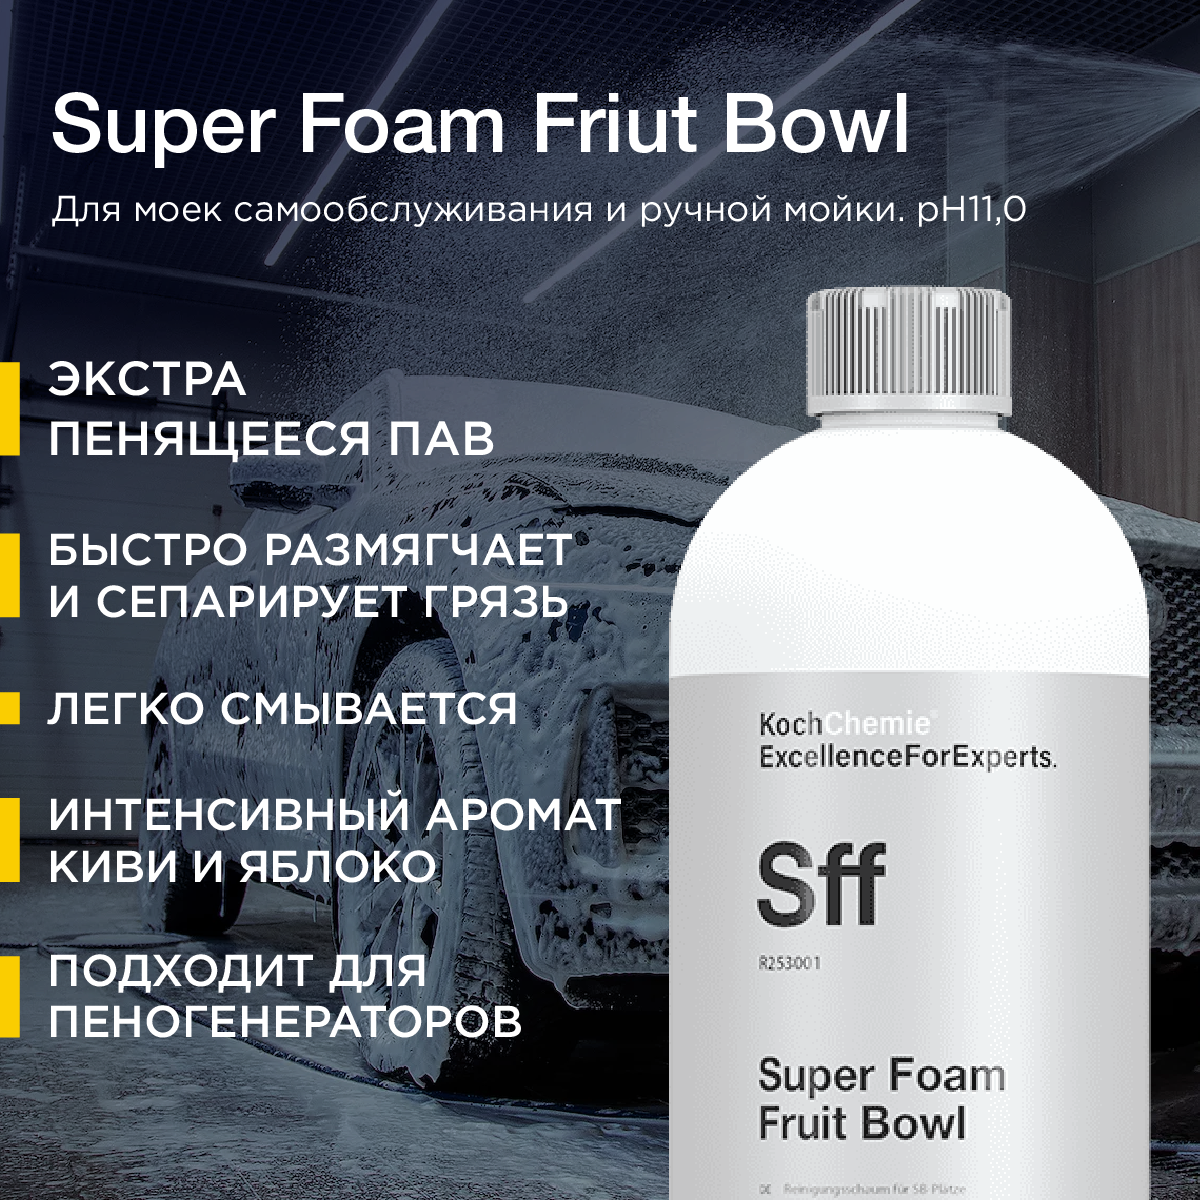 ExcellenceForExperts | Koch Chemie Super foam friut bowl - Чистящая пена для моек самообслуживания (1л)